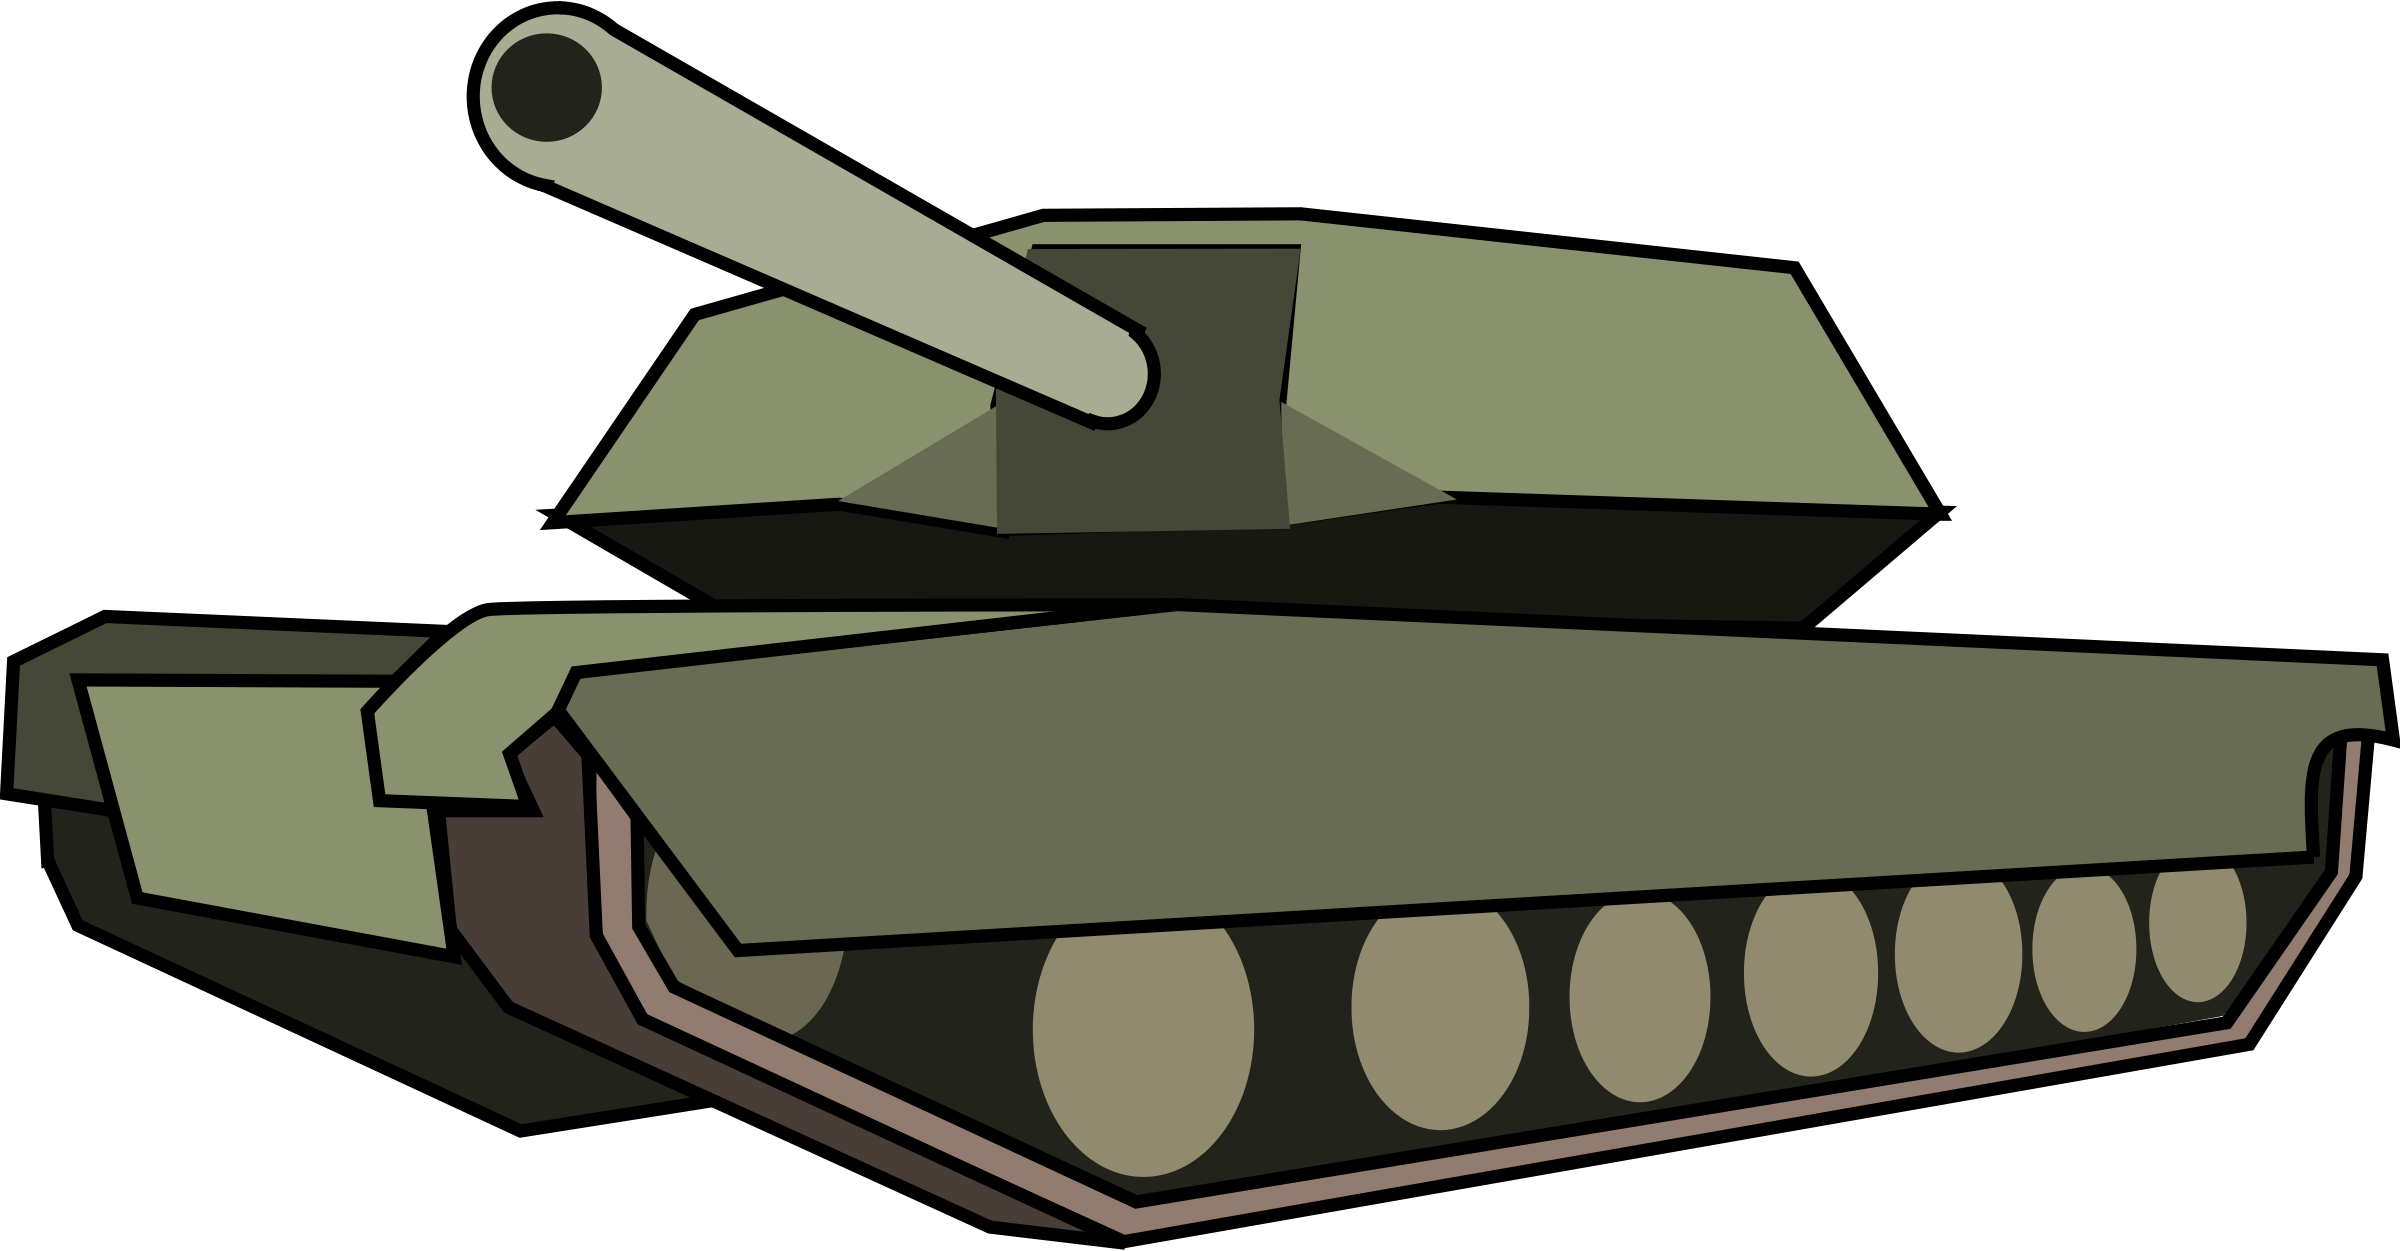 Simple Tank Drawing